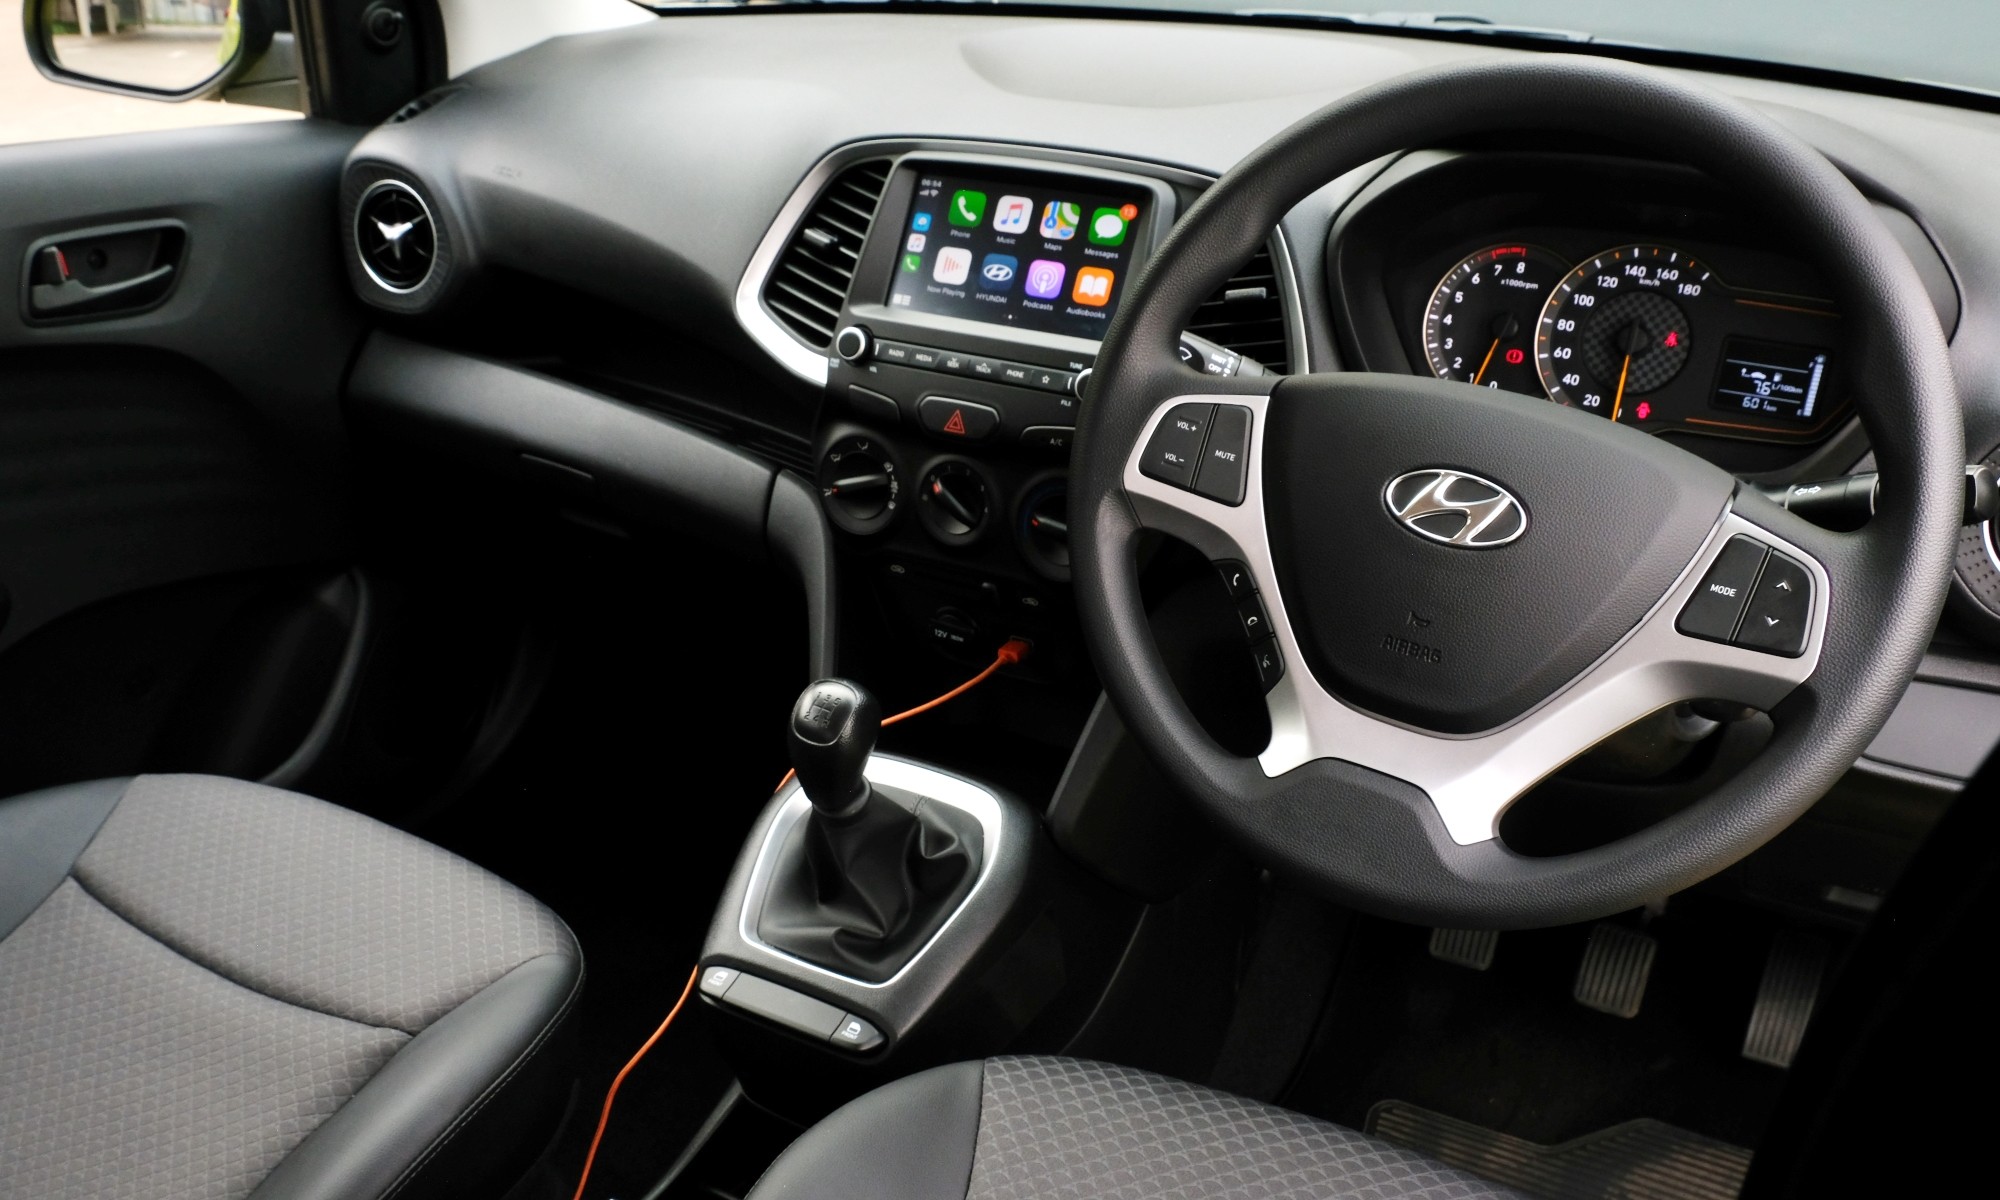 New Hyundai Atos interior